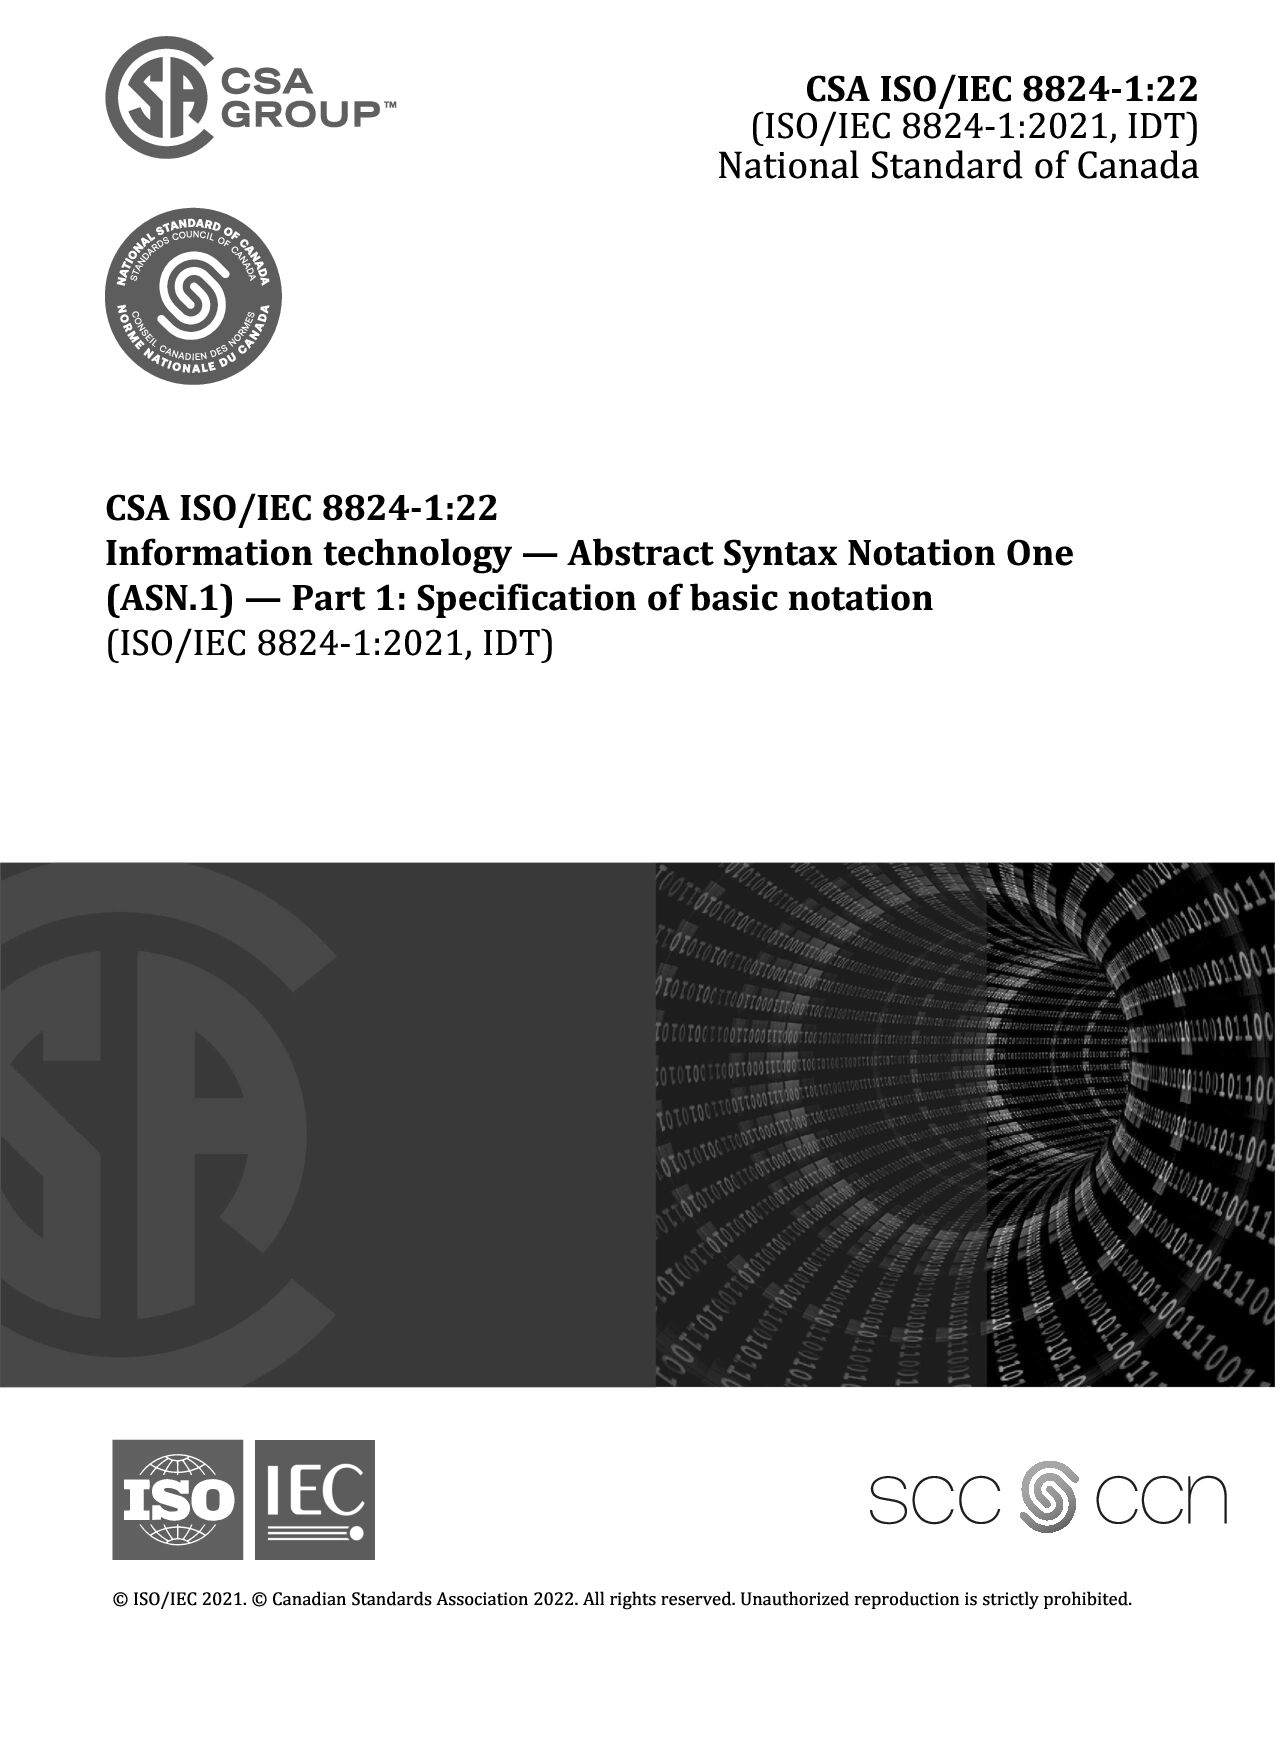 CSA ISO/IEC 8824-1:2022